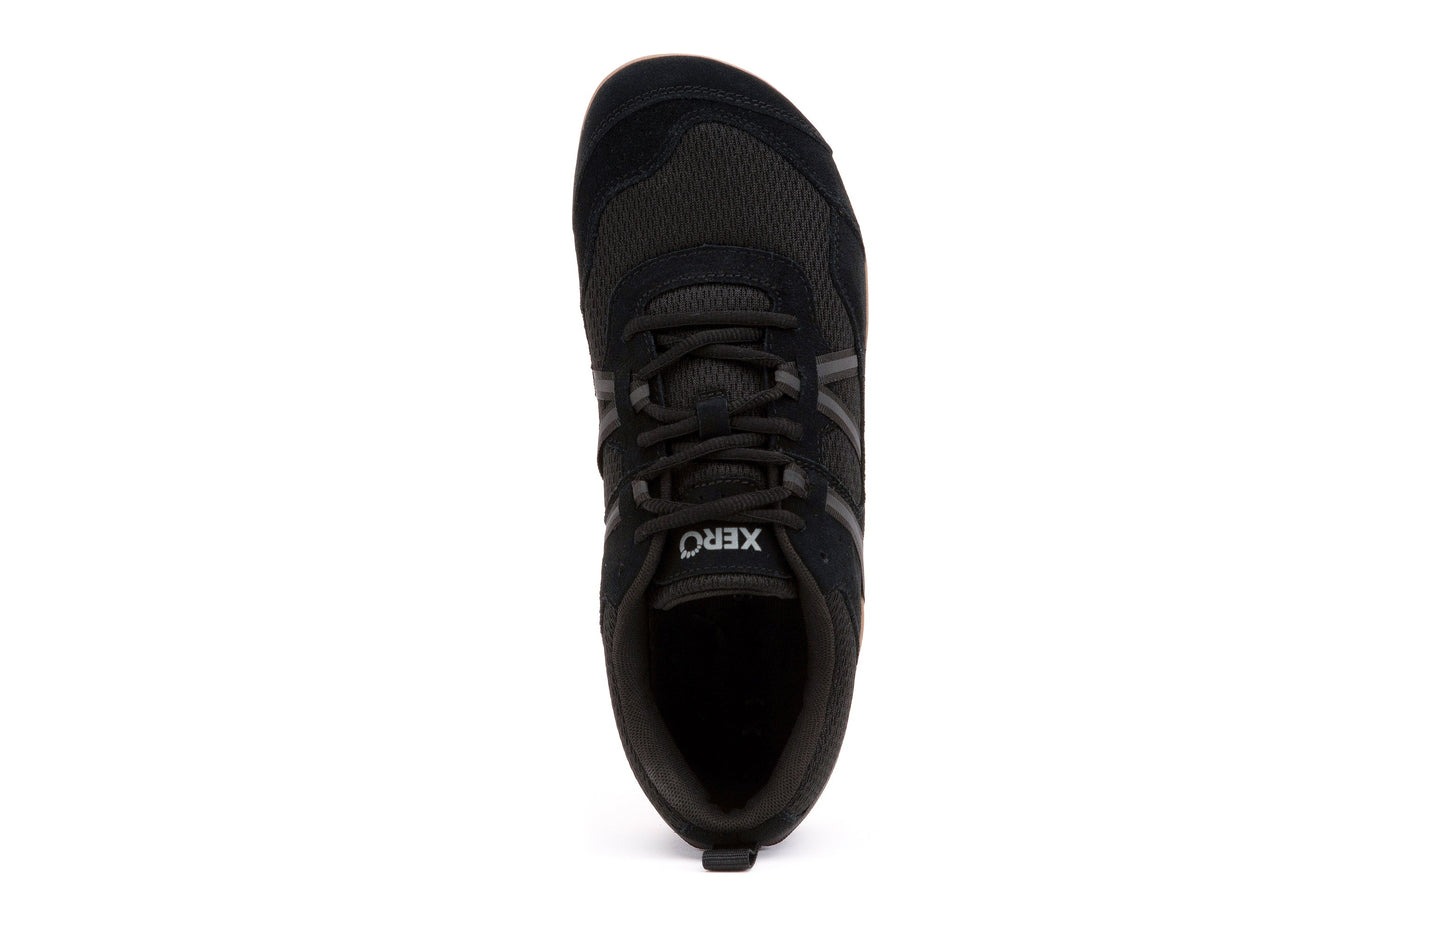 Xero Shoes Prio Suede barfods ruskind sneakers til mænd i farven black gum, top